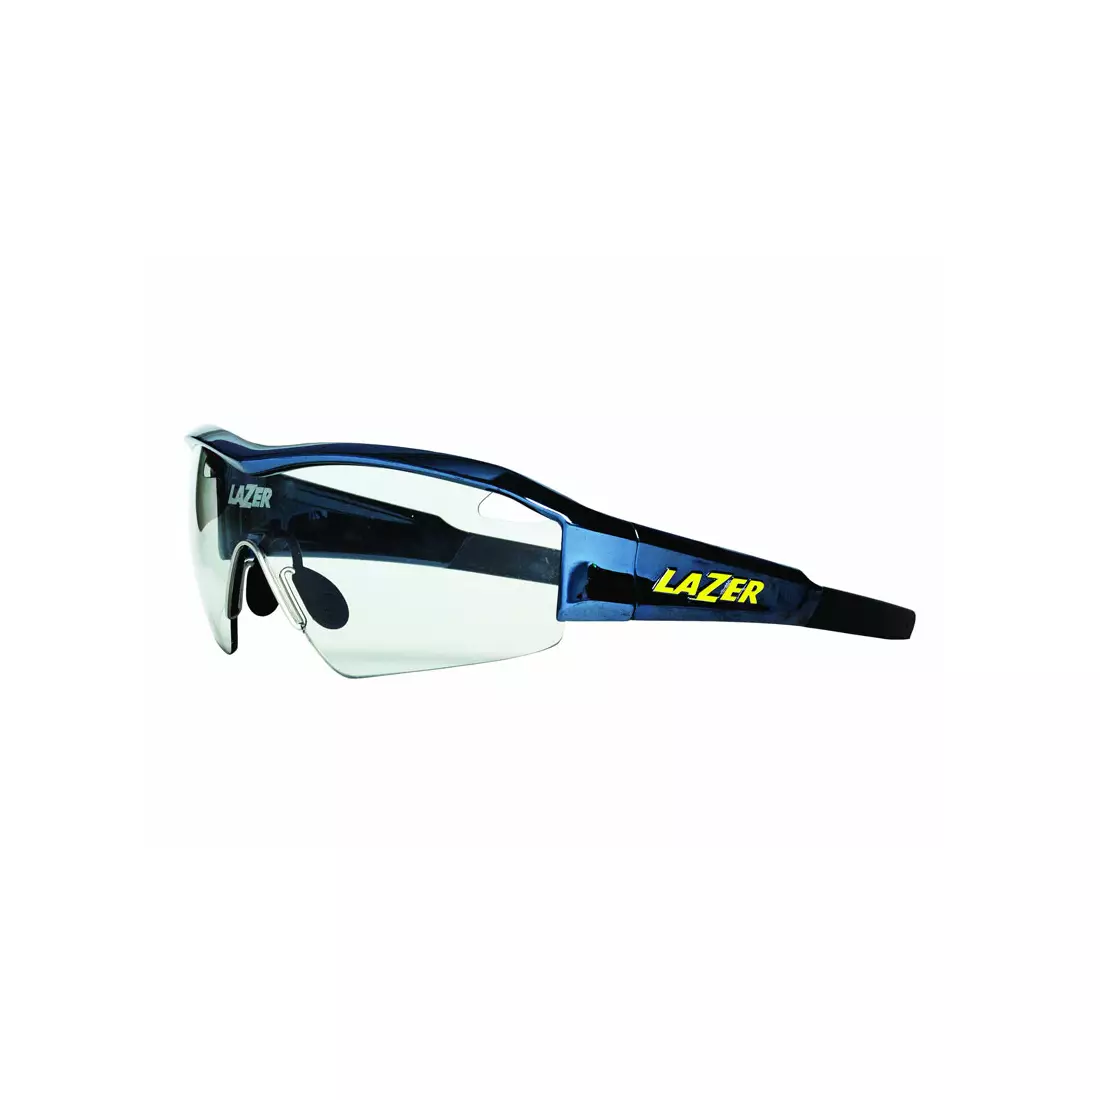 LZR-OKL-SOLD-F-CHRM Glasses LAZER SS17 SOLID STATE1 PHOTOCHROM Chrome (Crystal Photochrom)